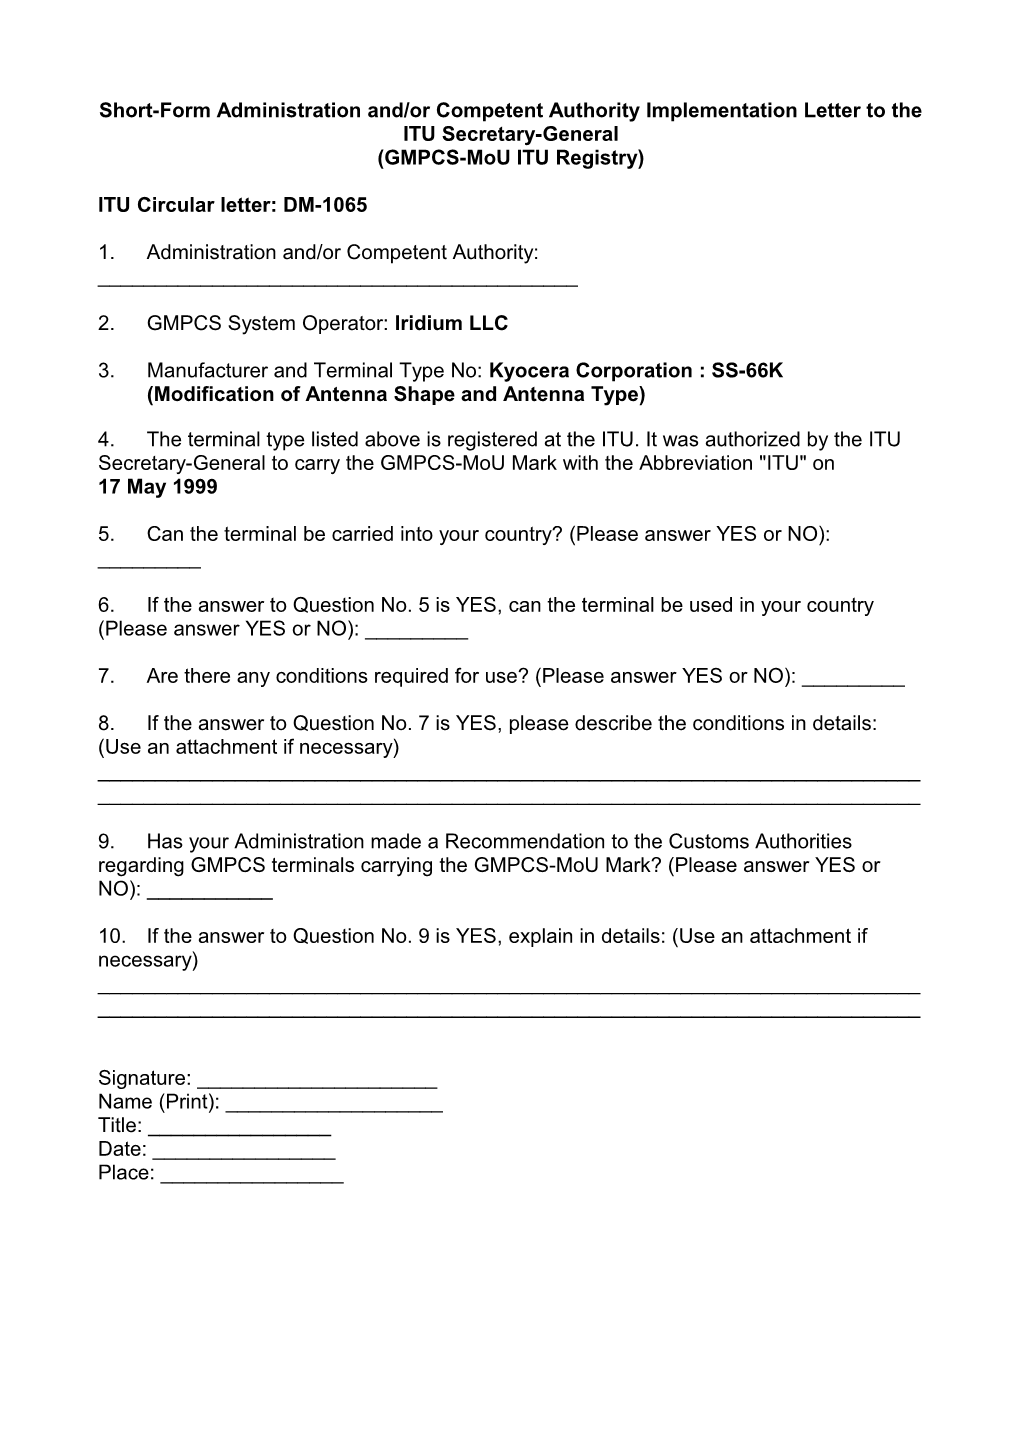 Short-Form Administration Letter: Kyocera SS-66K, SD-66K (Ant.)